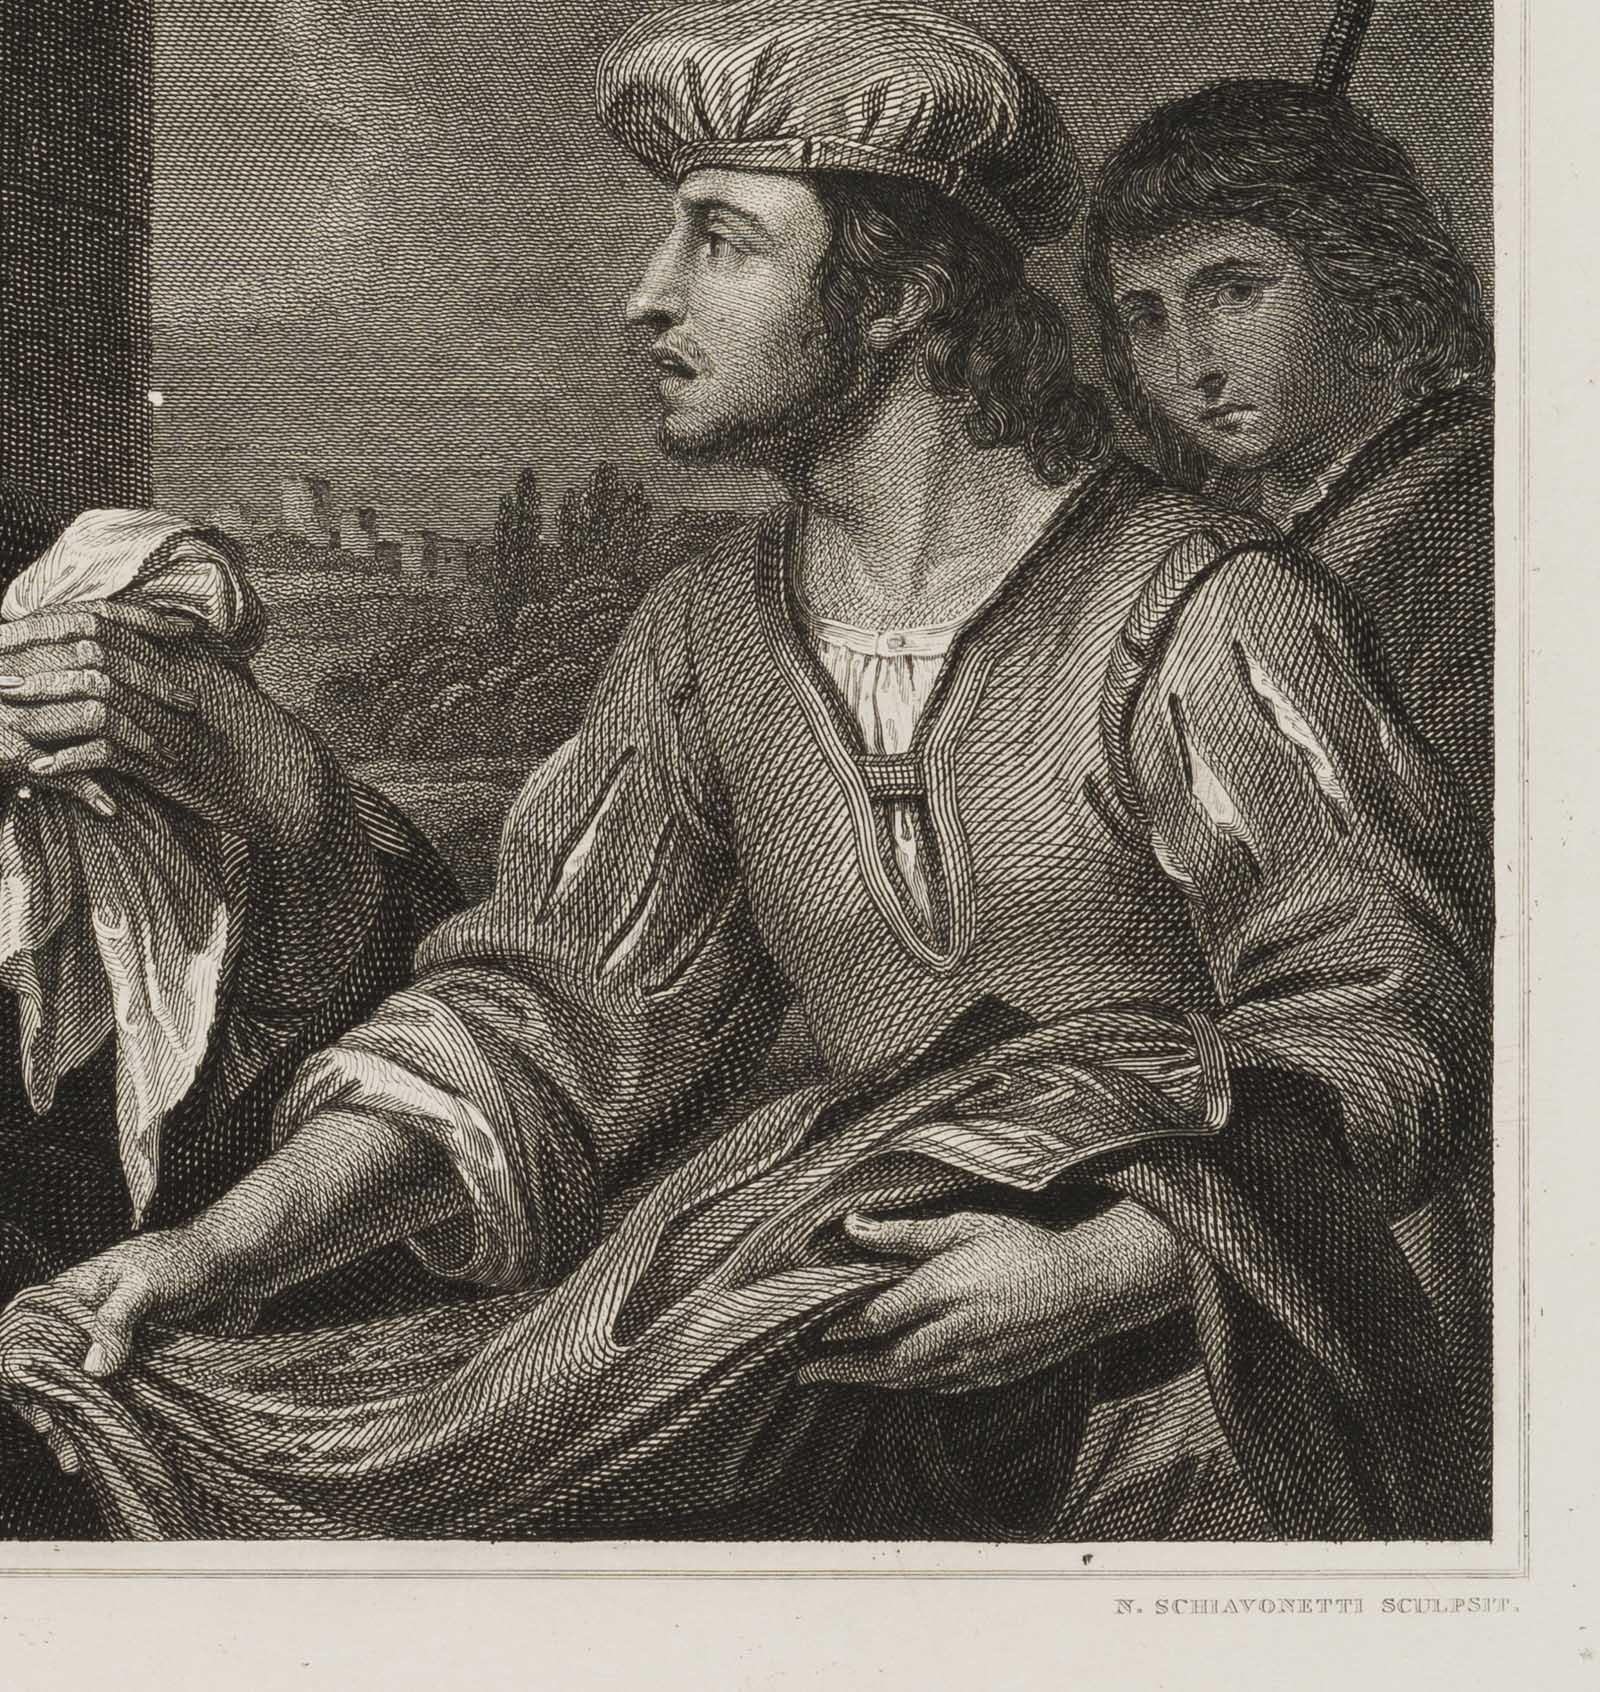 Jacob beholds Joseph's bloody robe - Baroque Print by Niccolo Schiavonetti jr.